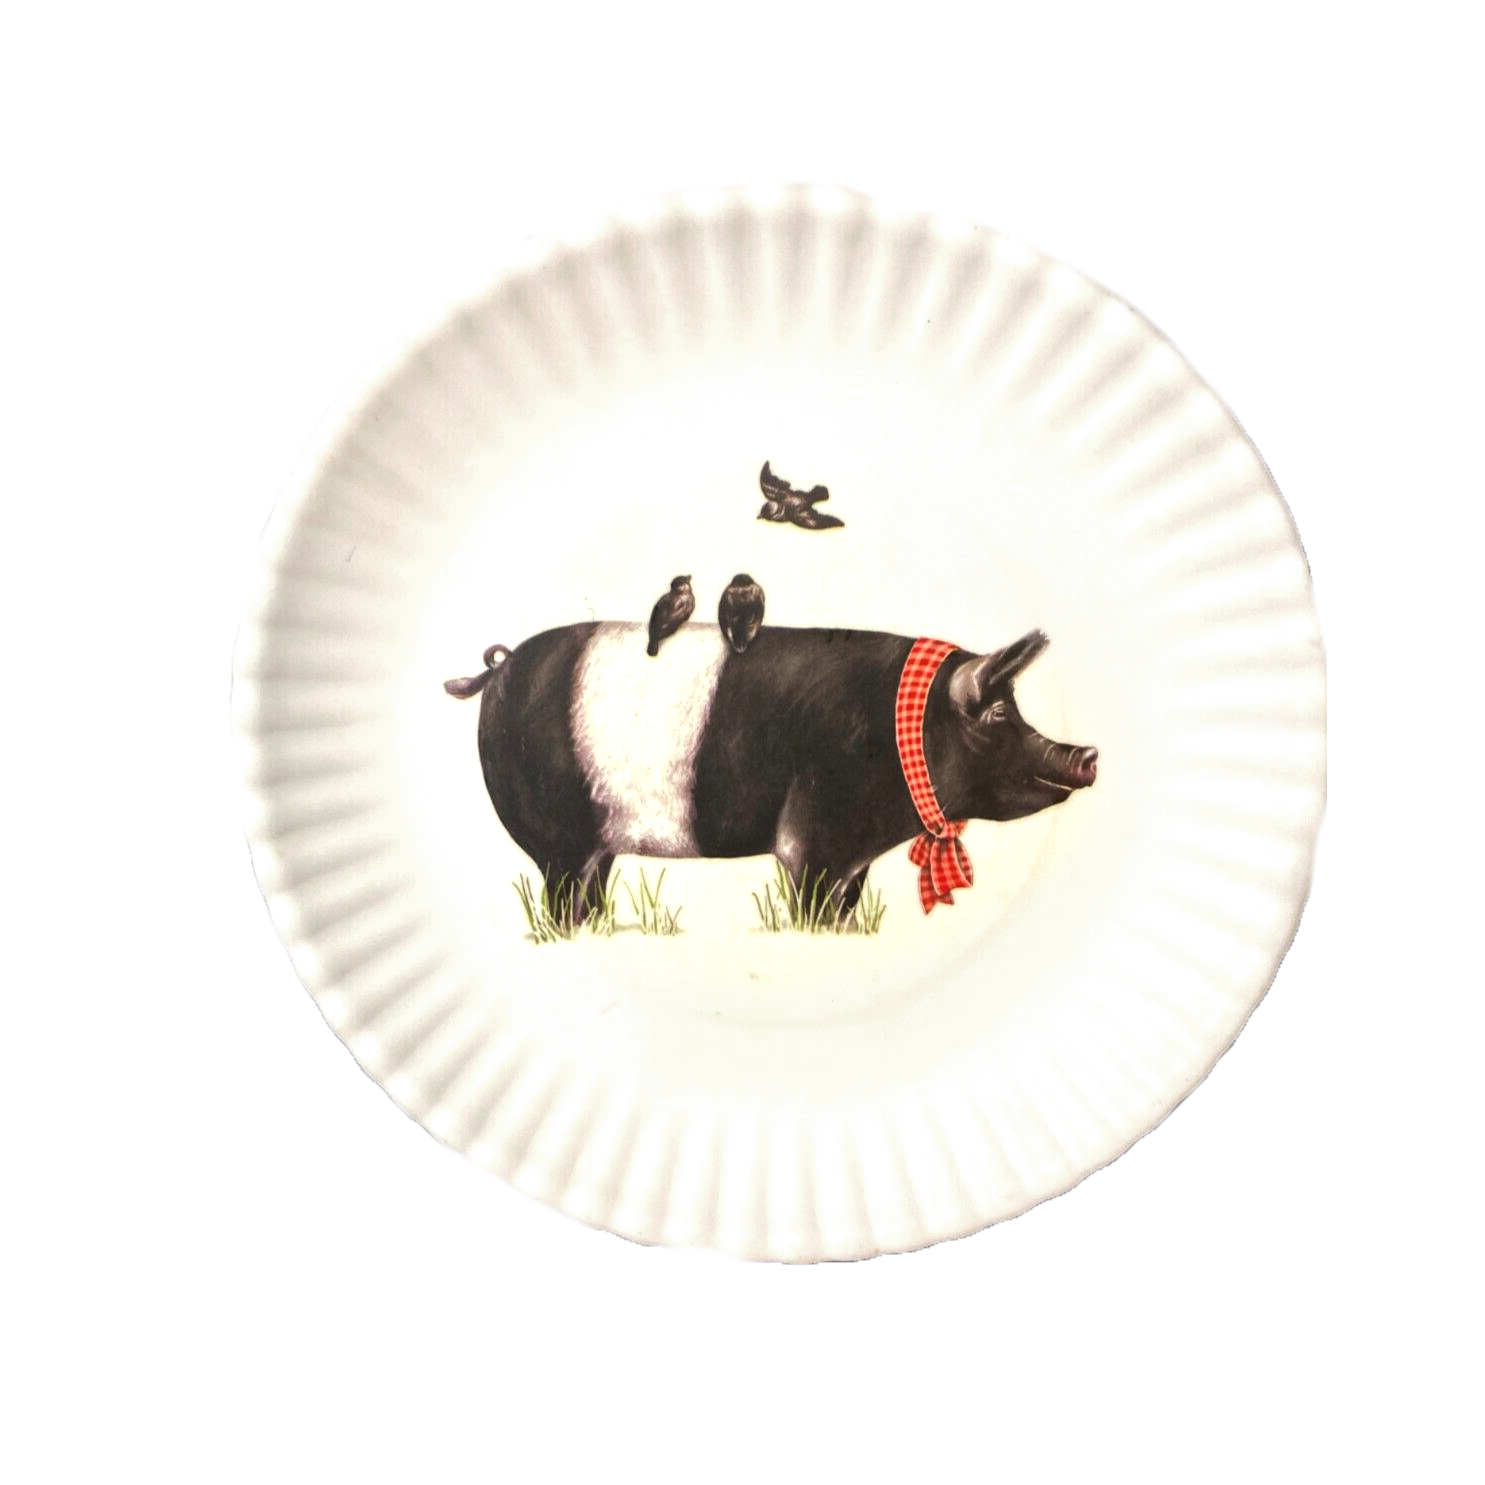 Farmhouse Animals Melamine Plates - Rustic Charm, Modern Durability!